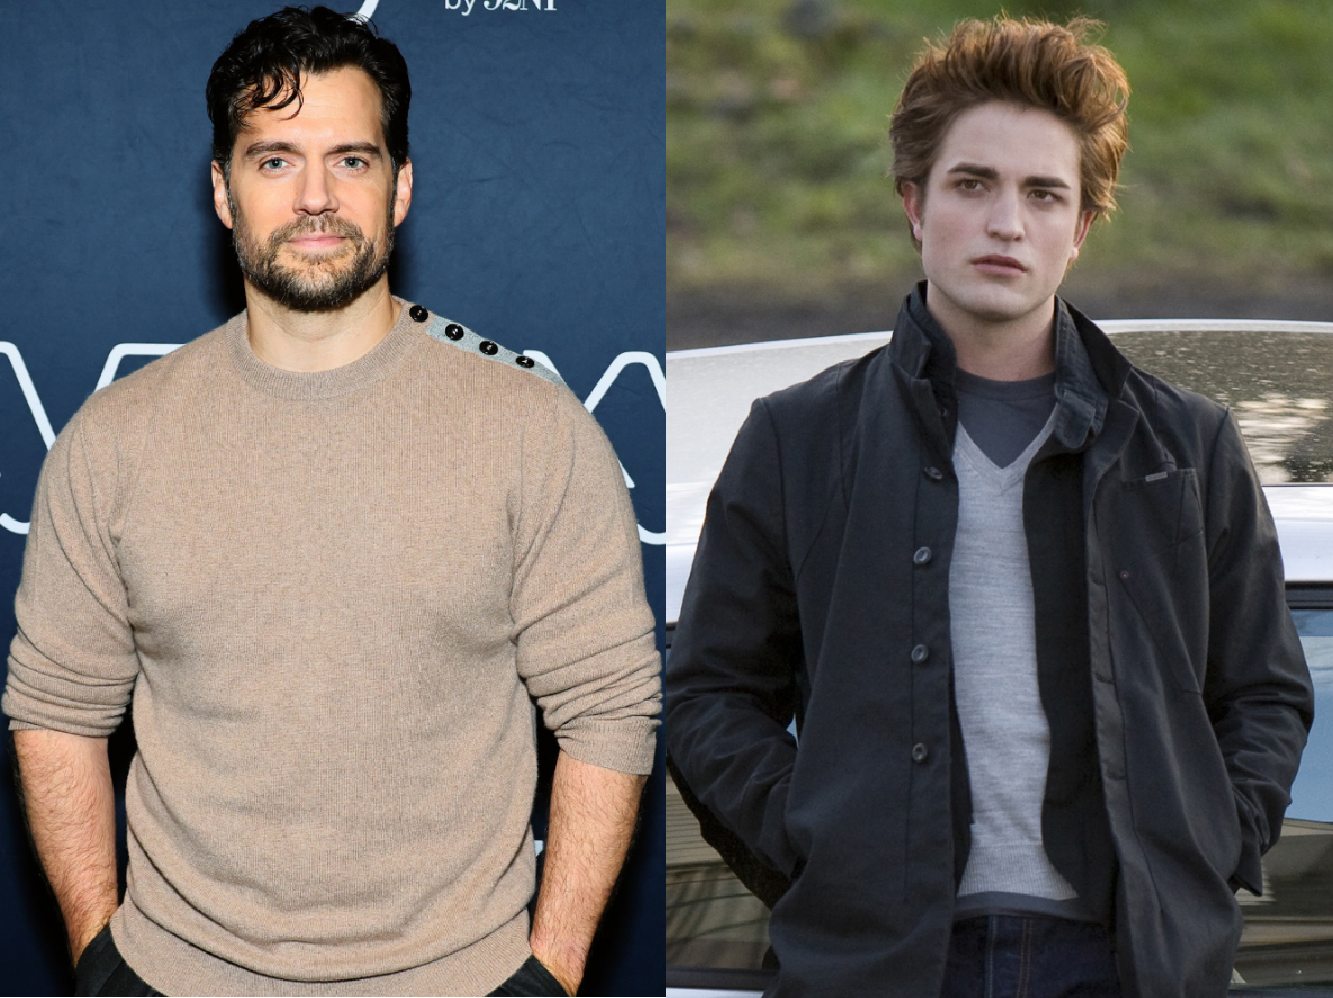 Reaksi Henry Cavill Jadi Kandidat Favorit Stephenie Meyer untuk 'Twilight'